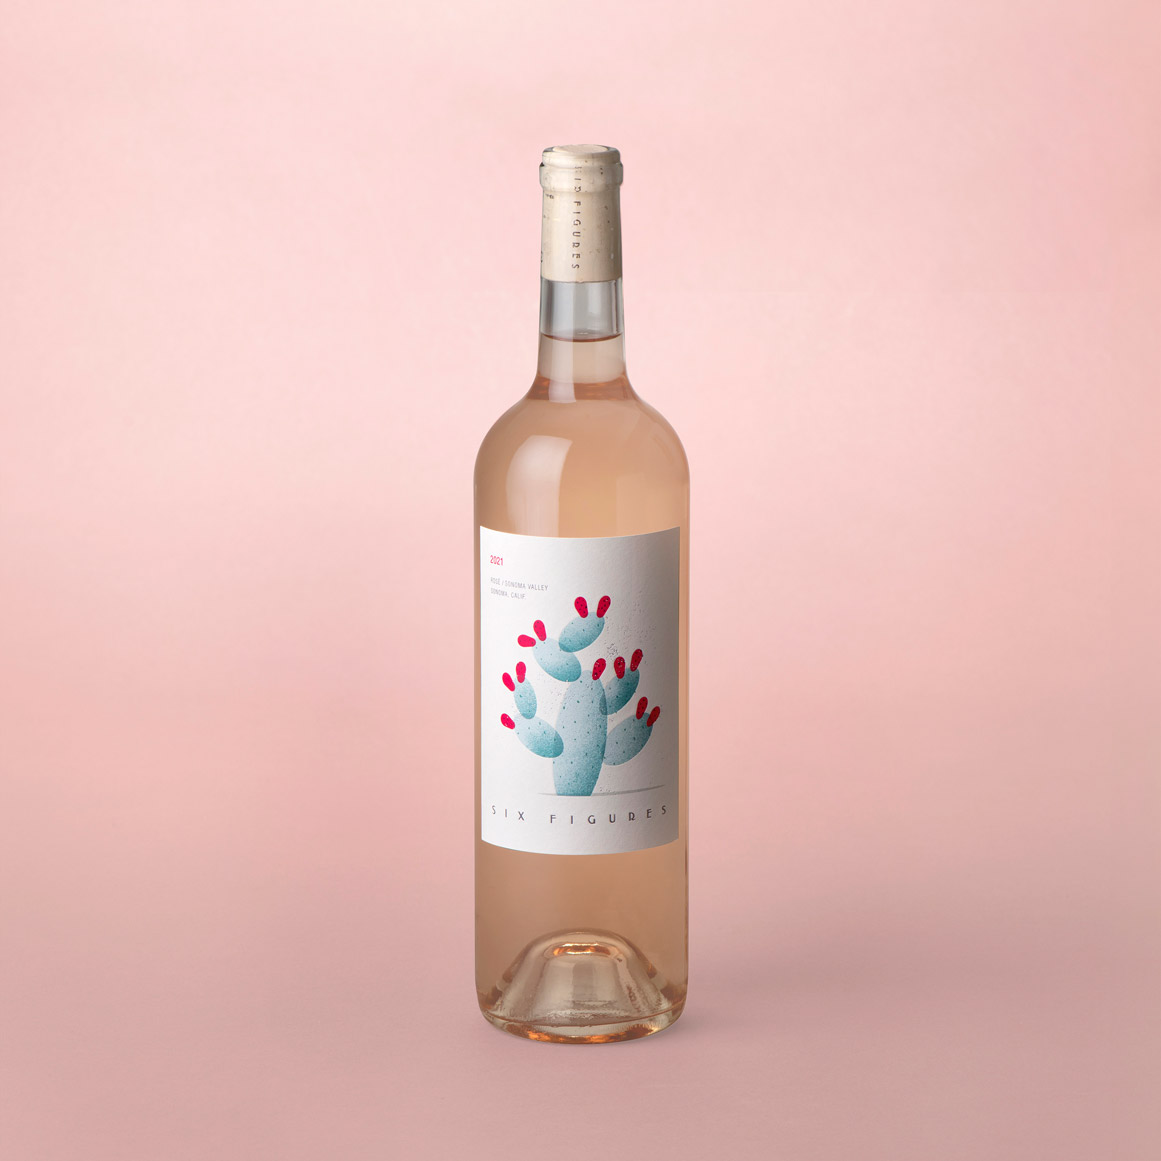 A bottle of Six Figures 2021 Rosé wine.